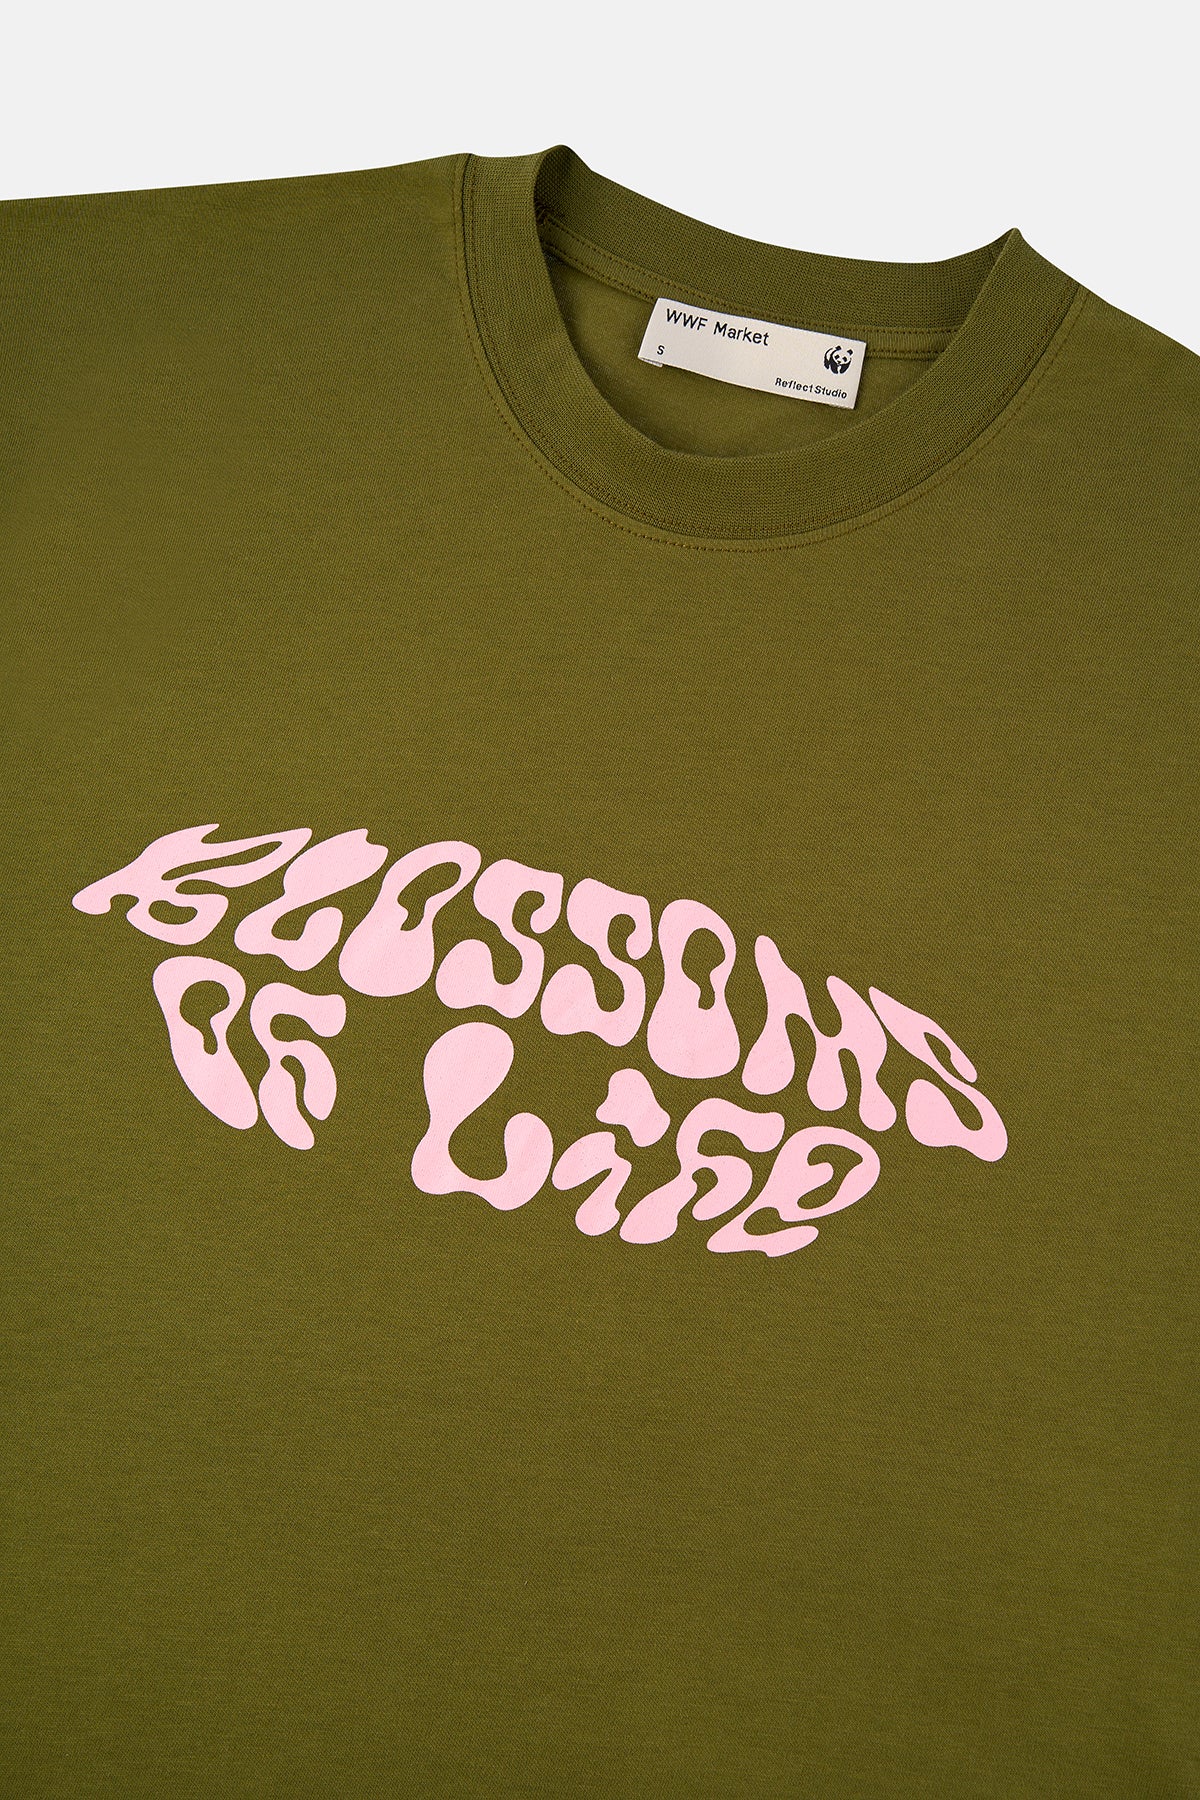 Blossoms Supreme Oversize T-shirt - Yosun Rengi